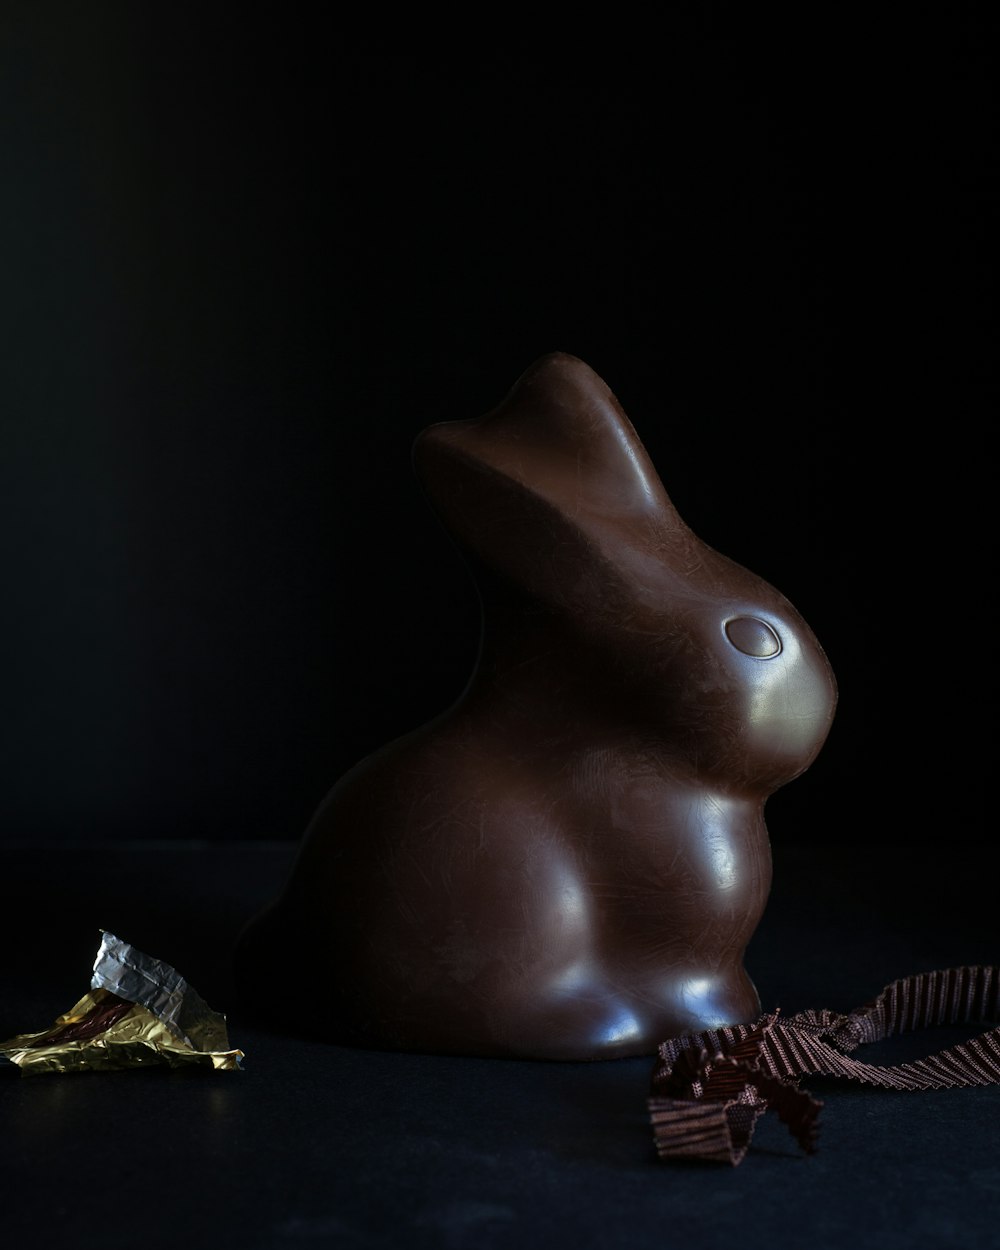 bunny chocolate on black sufrace